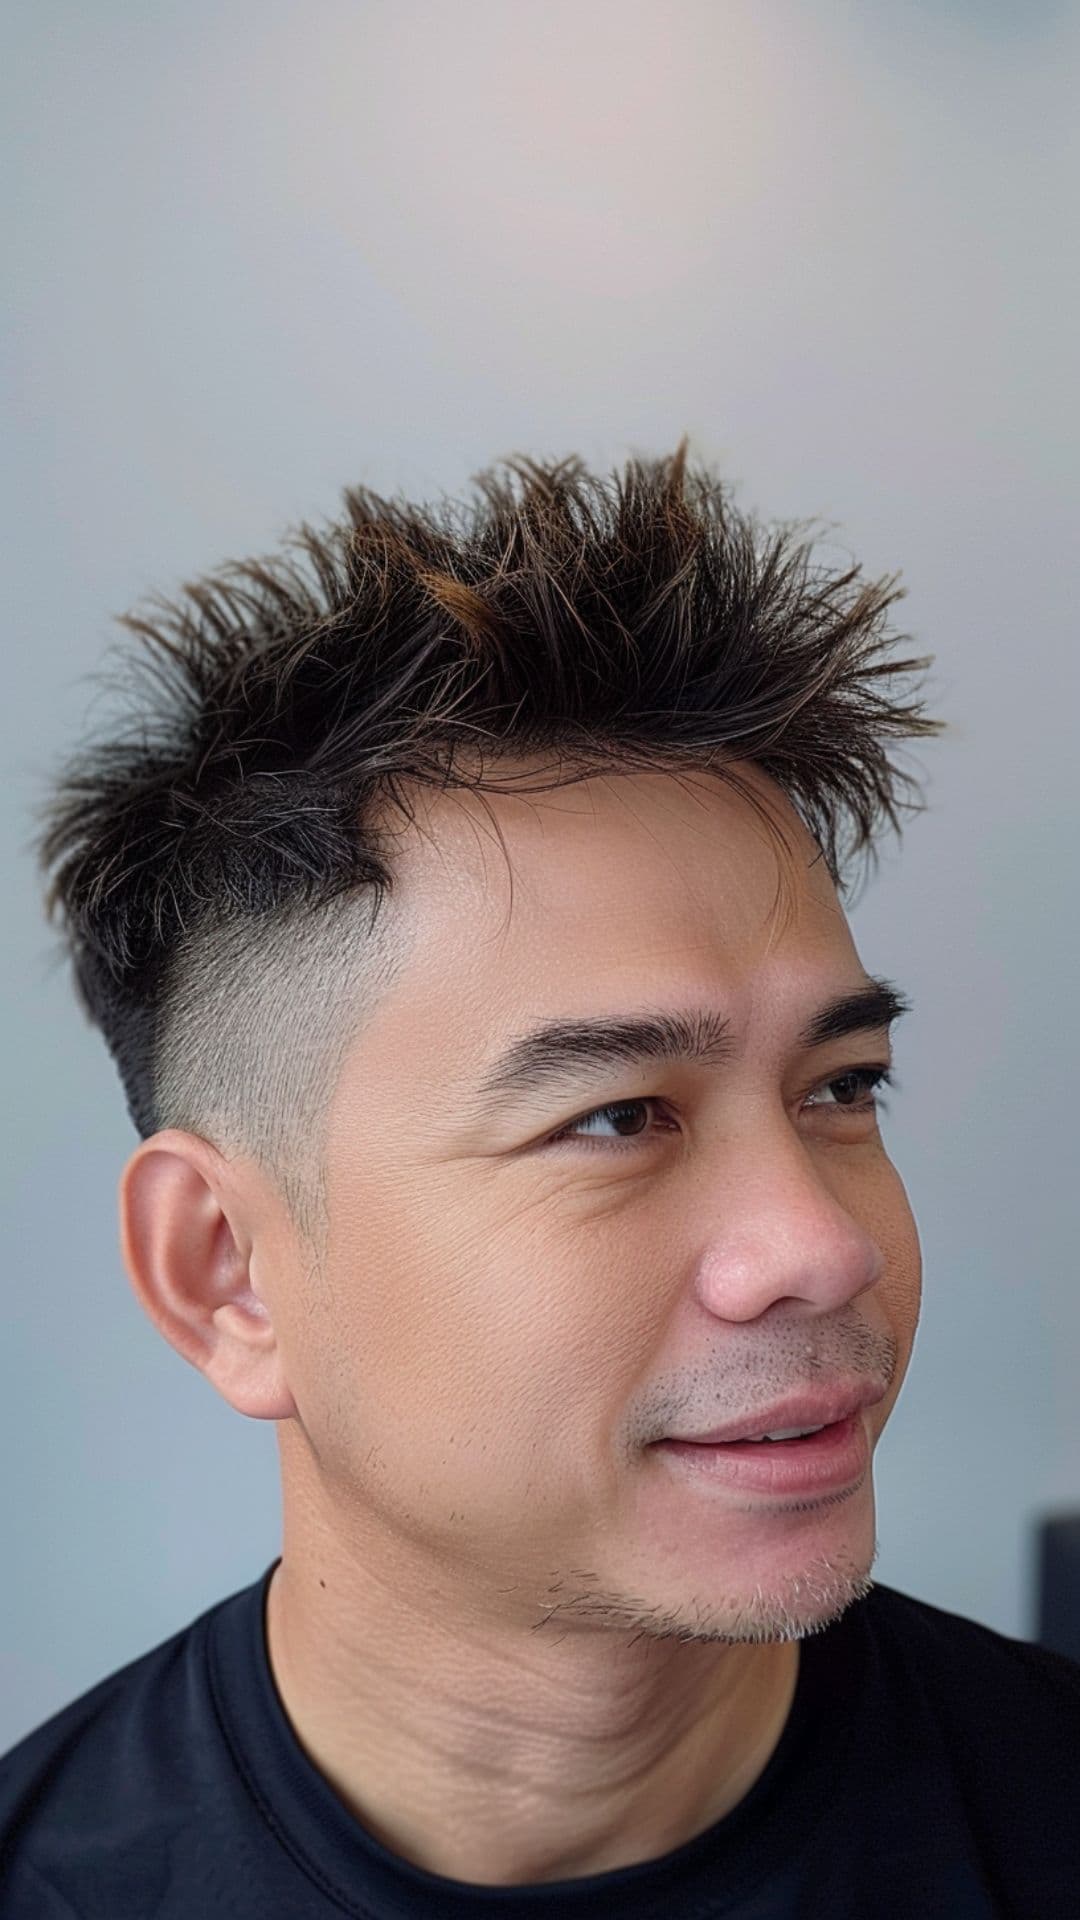 A man modelling a spiky hair.